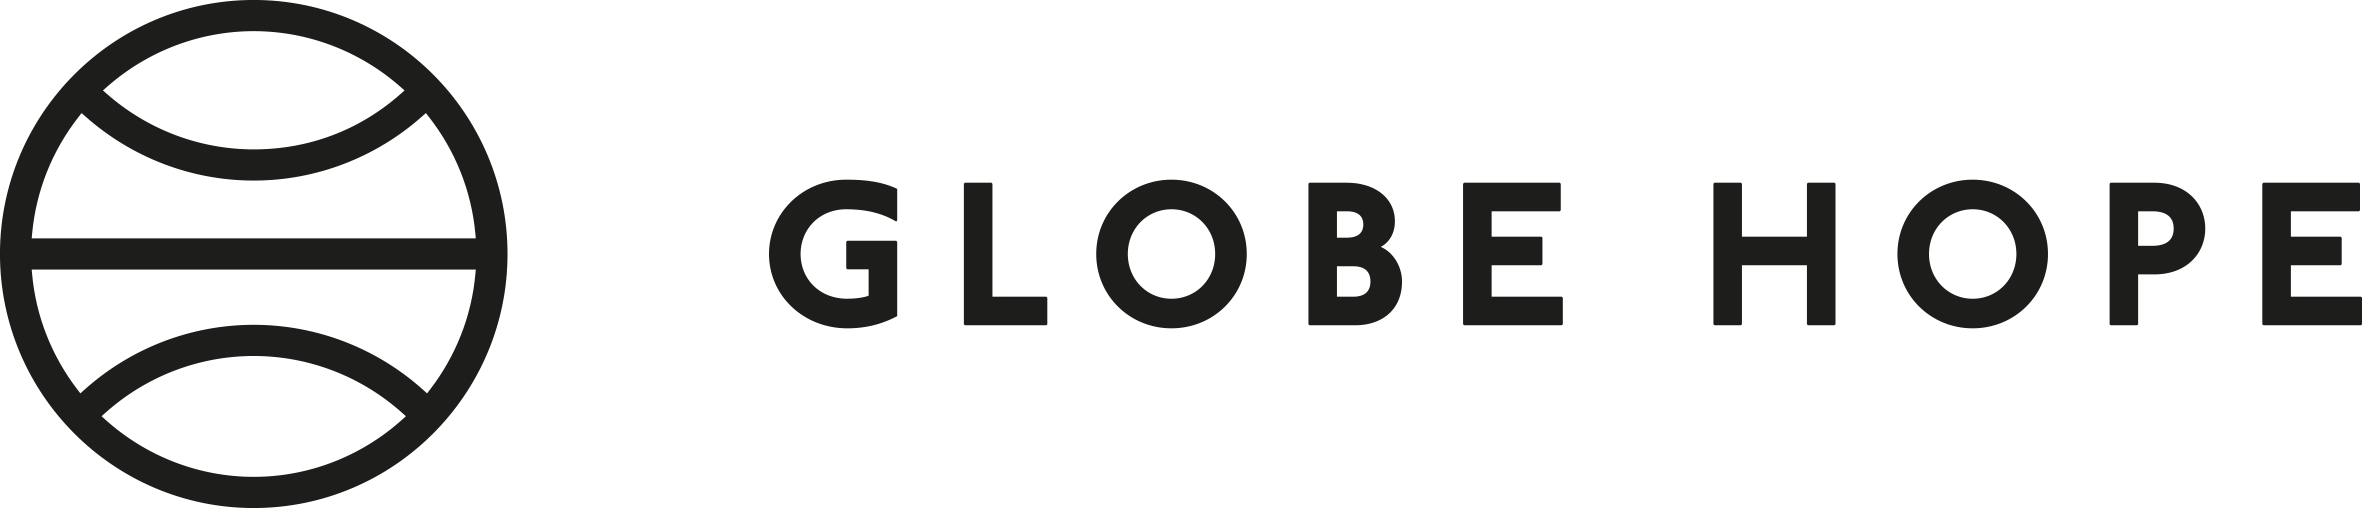 Globe-Hope-logo